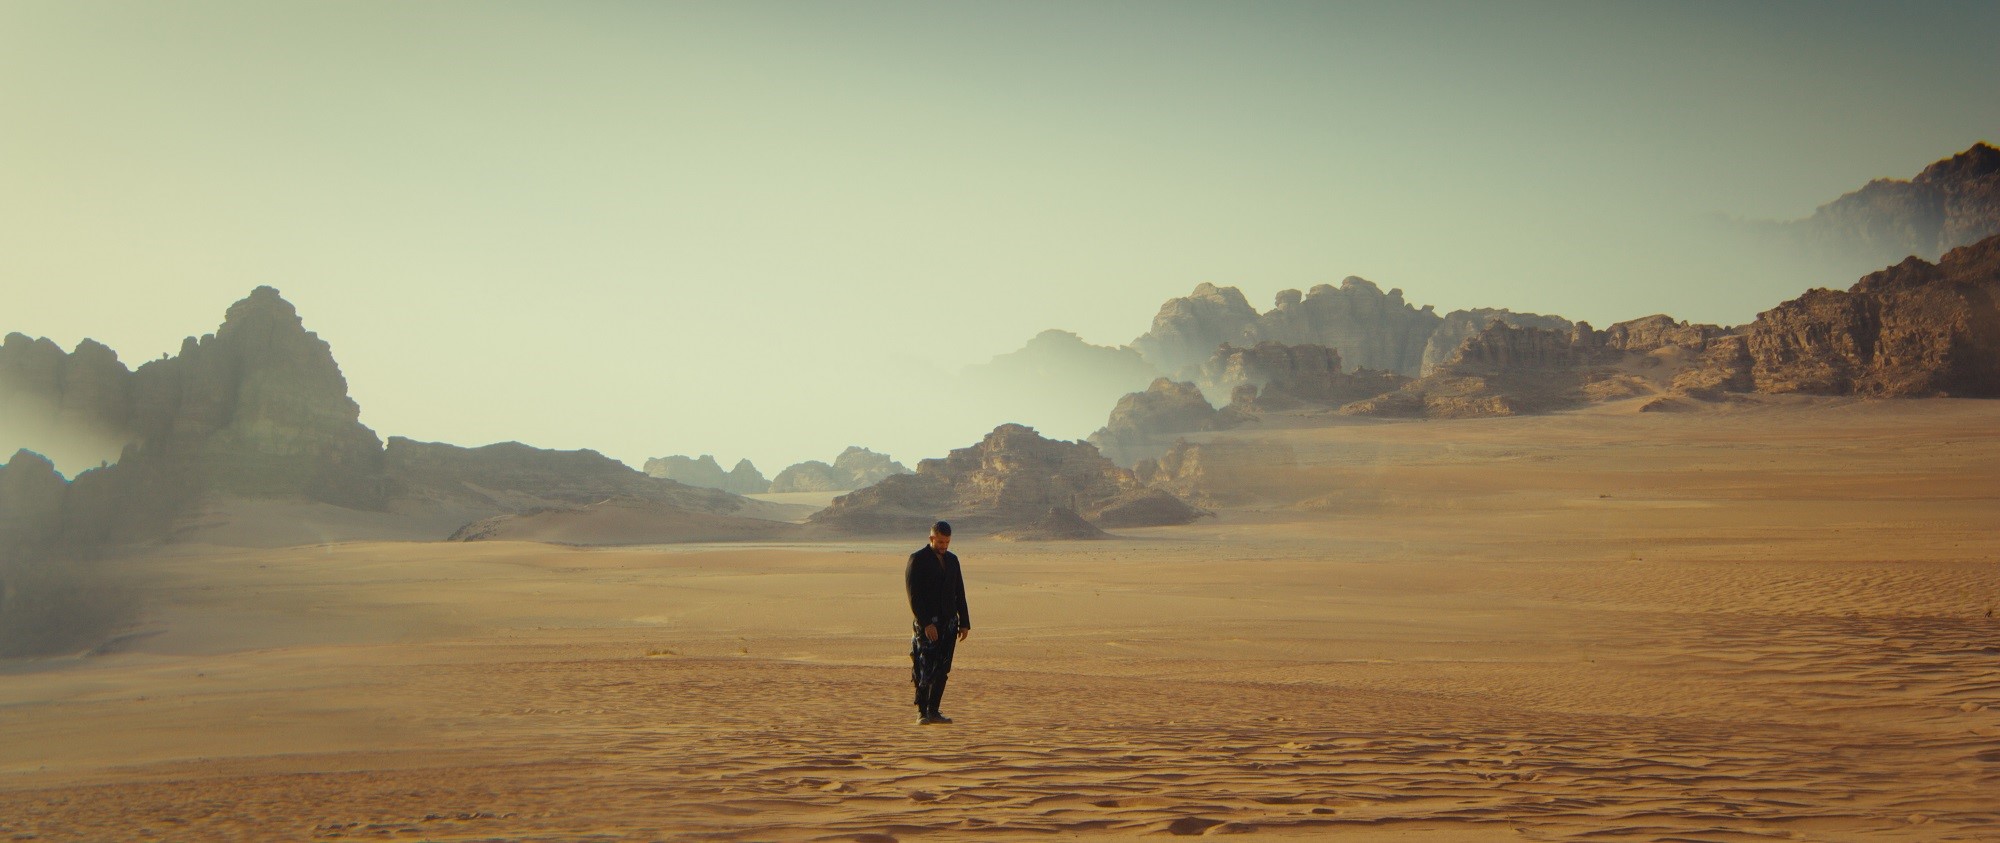 Damir Kedžo predstavlja novi singl “Izbor je tvoj” i spot snimljen u veličanstvenoj pustinji Jordana